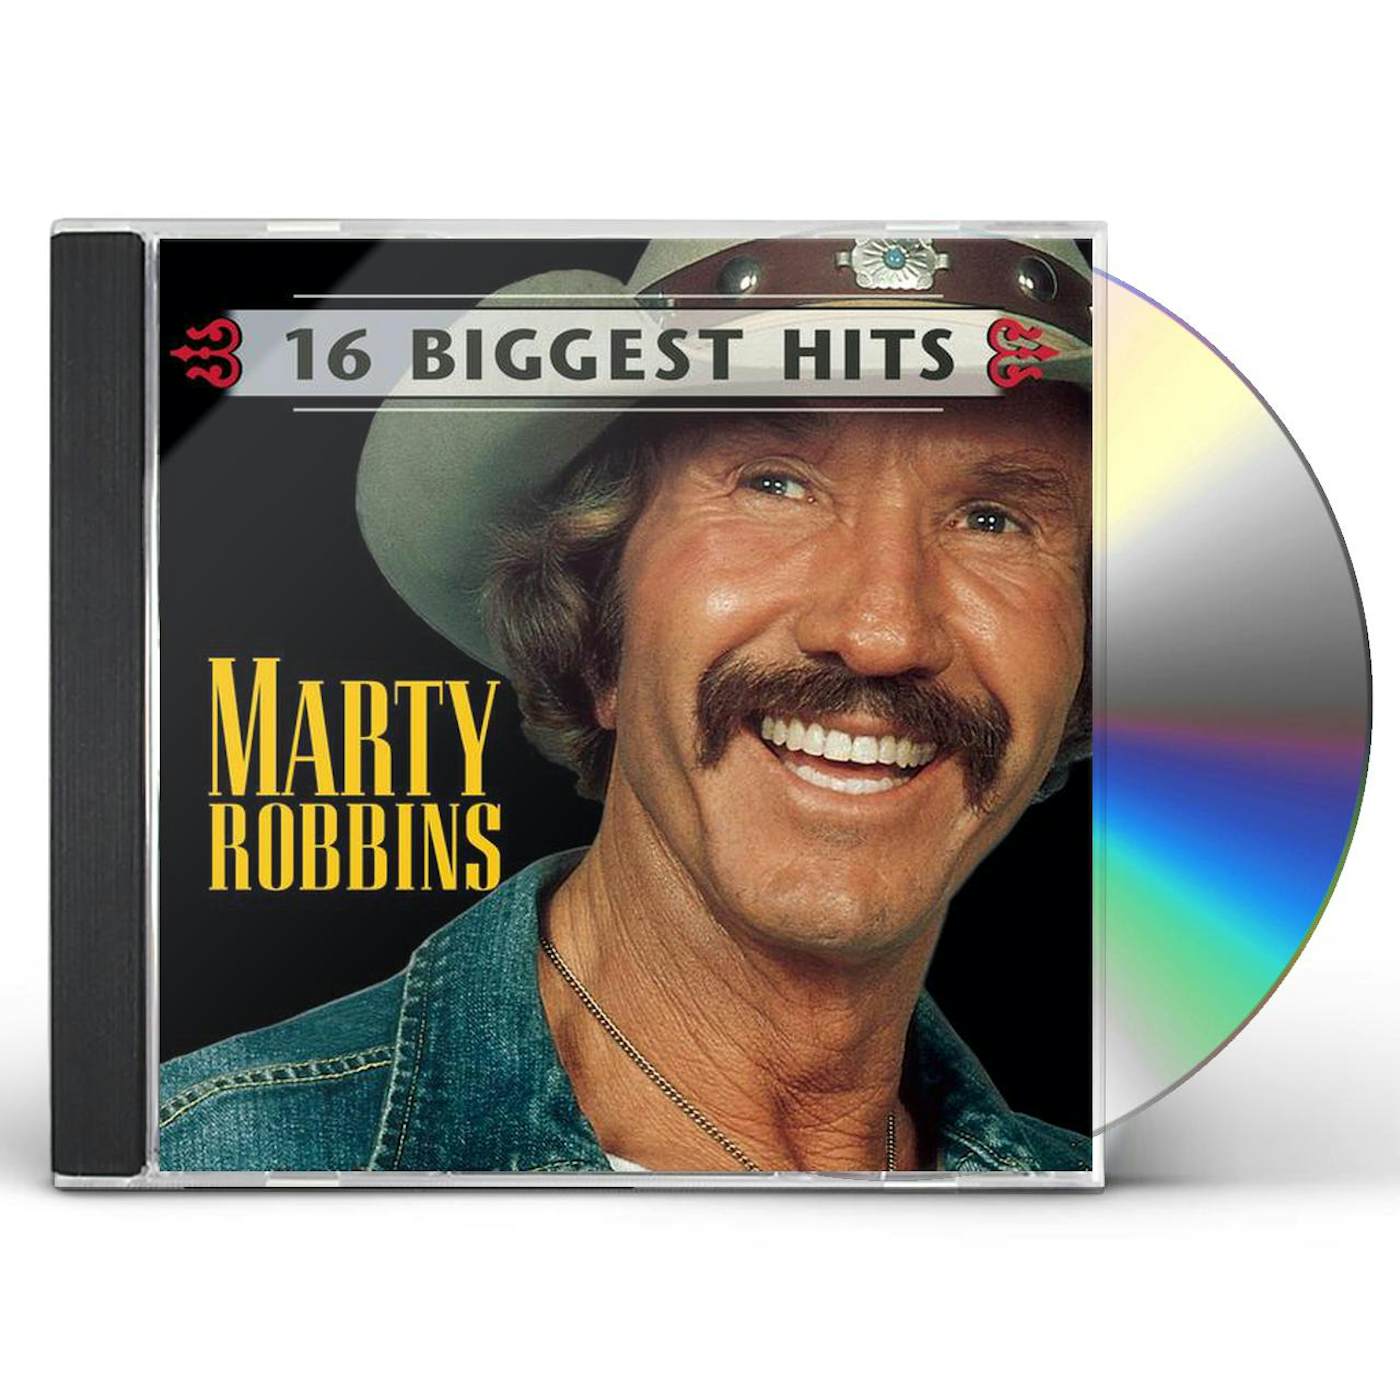 Marty Robbins 16 BIGGEST HITS CD